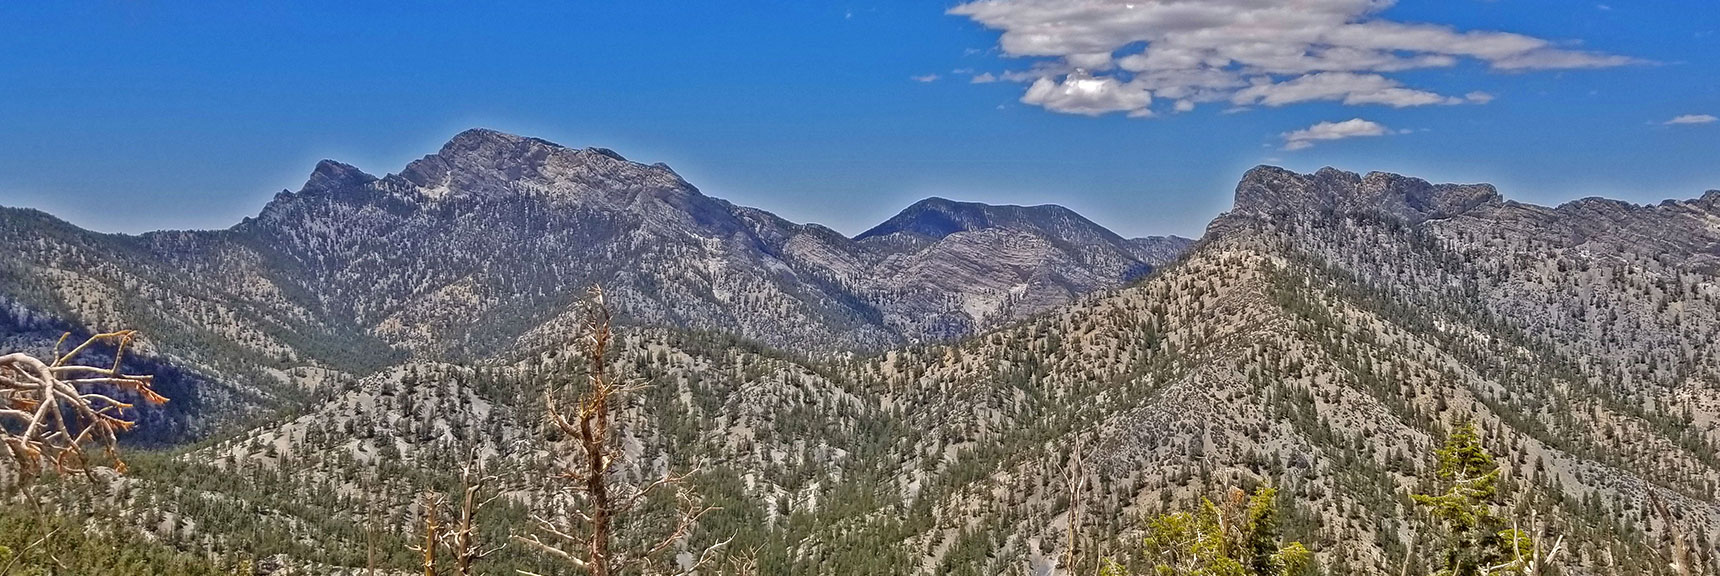 Additional View of McFarland Peak (left), Bonanza Peak (middle), Macks Peak (right)| Black Rock Sister | Mt Charleston Wilderness | Lee Canyon | Spring Mountains, Nevada